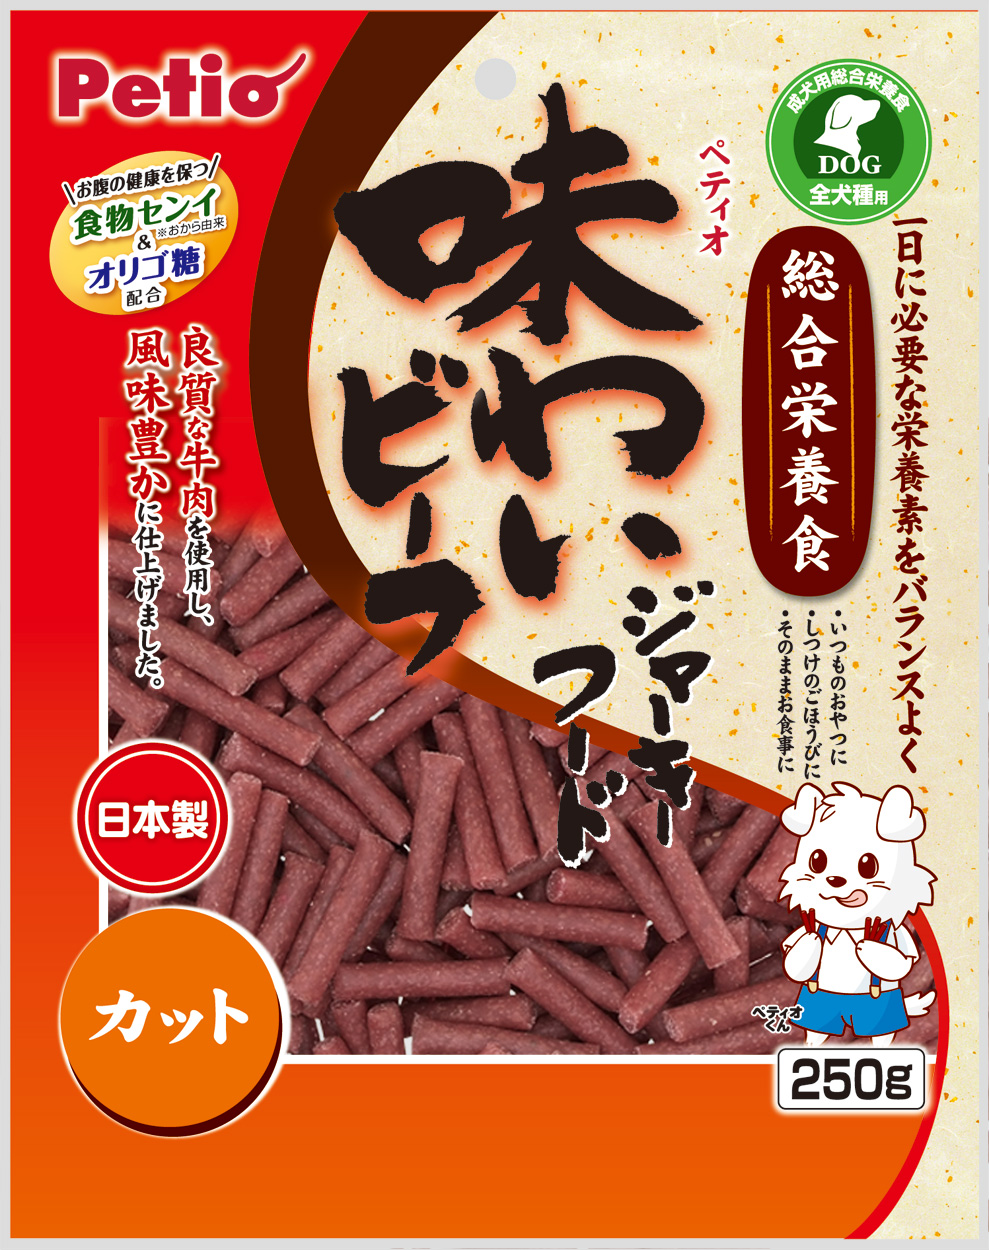 派地奧美味牛肉條(短)-250g
Petio dog treat-beef(cut)